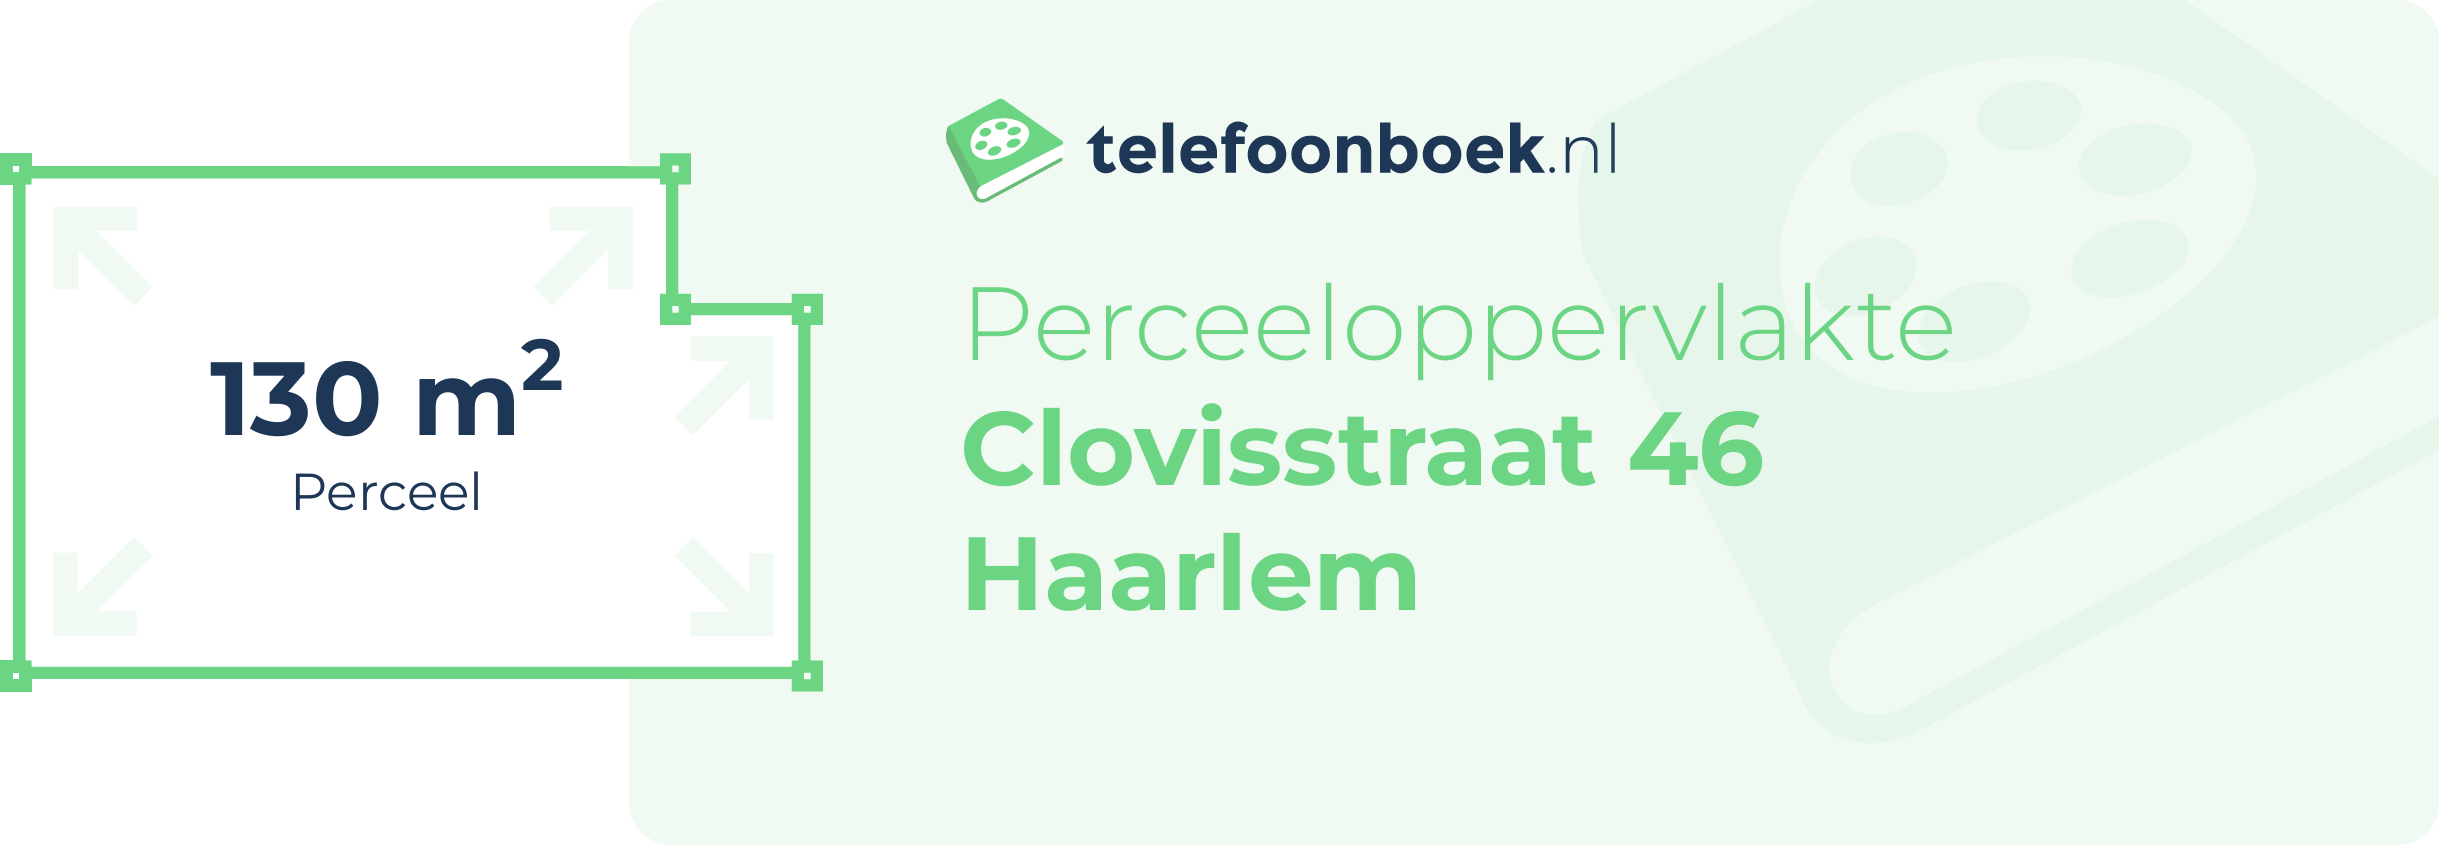 Perceeloppervlakte Clovisstraat 46 Haarlem